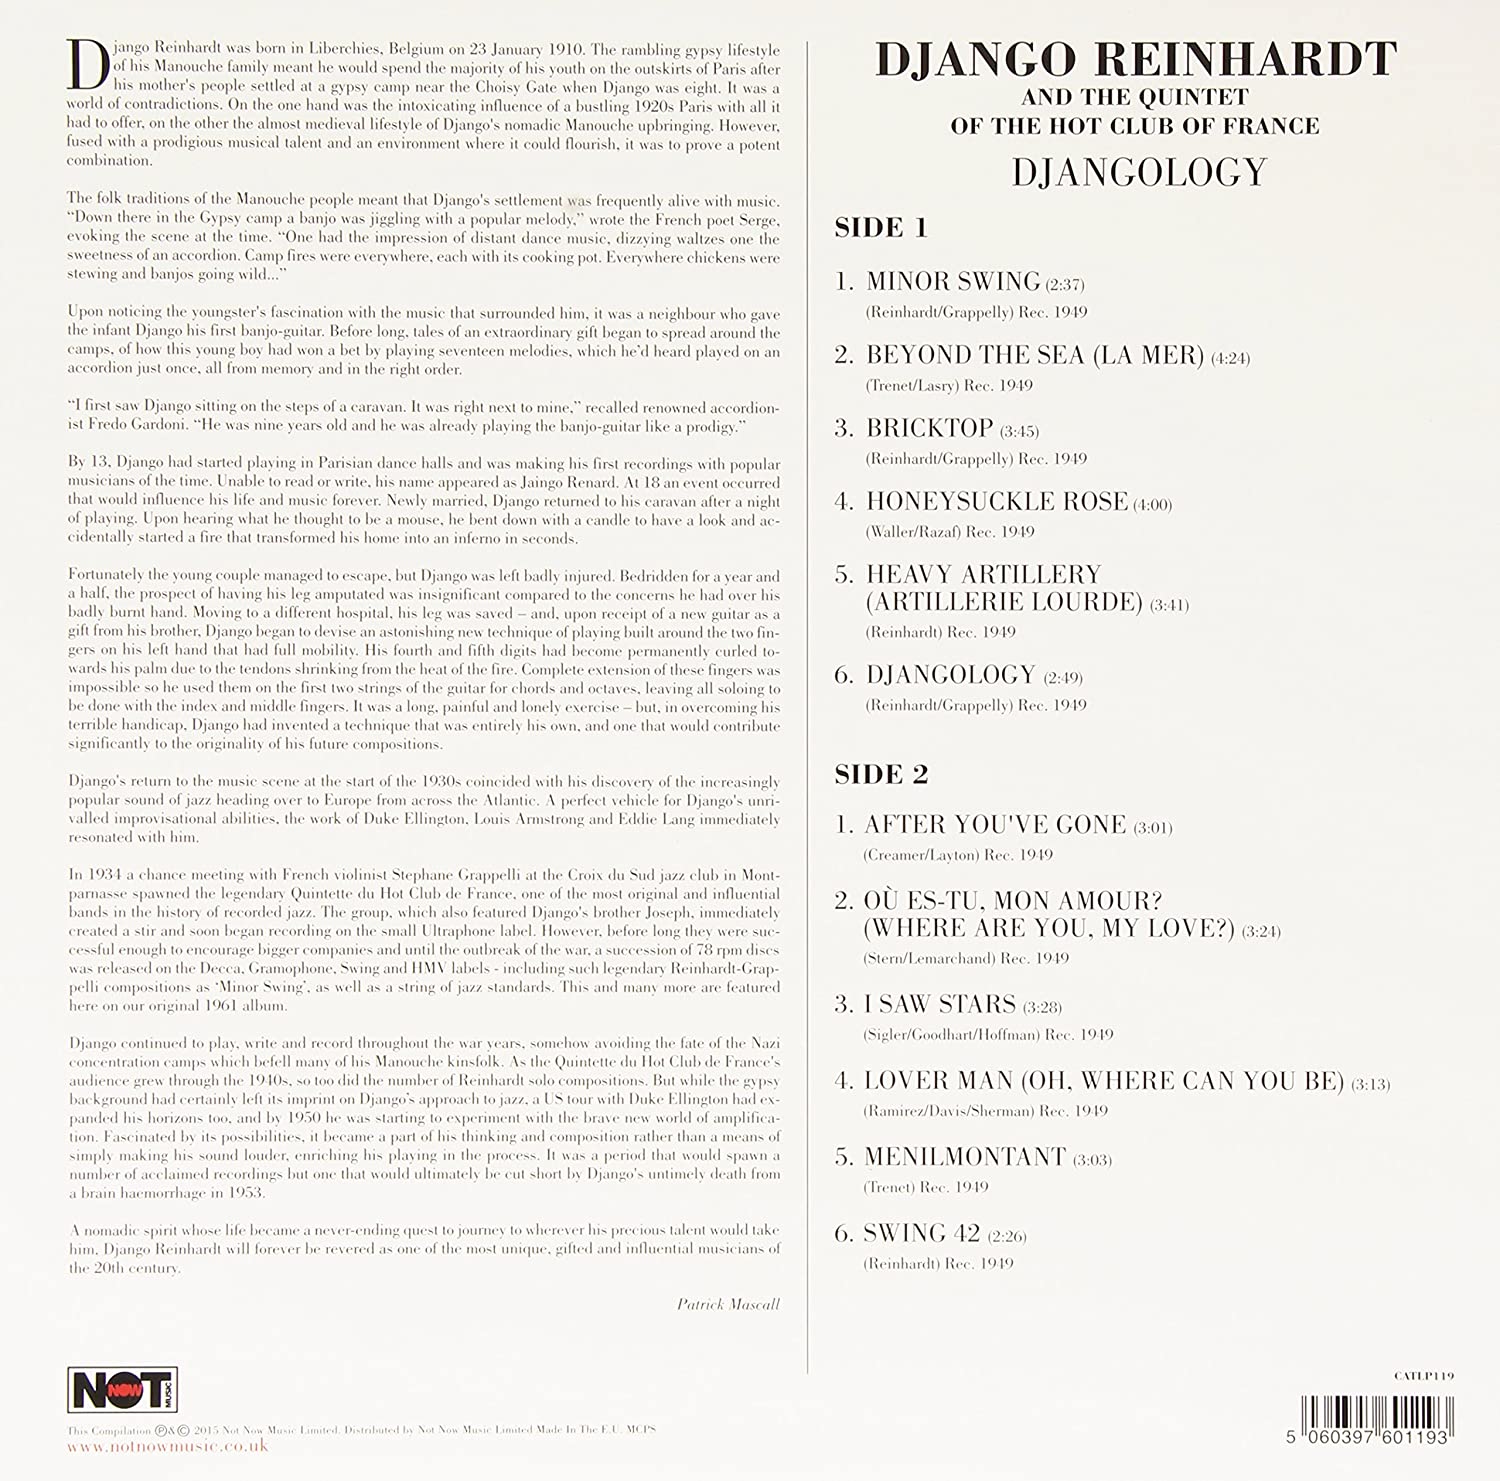 Django Reinhardt / Quintet of the Hot Club of France (장고 라인하르트) - Djangology [LP]